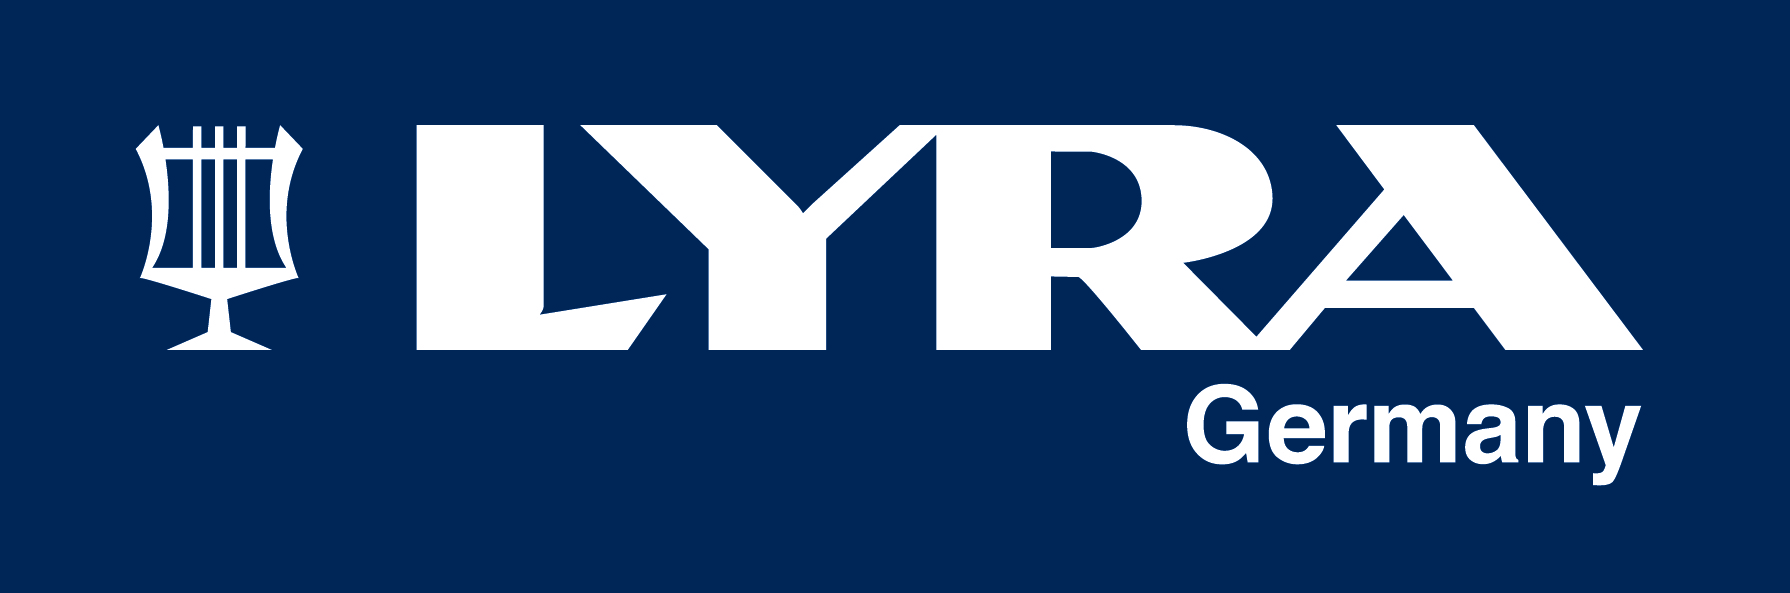 lyra-logo2022_neg_CMYK.jpg